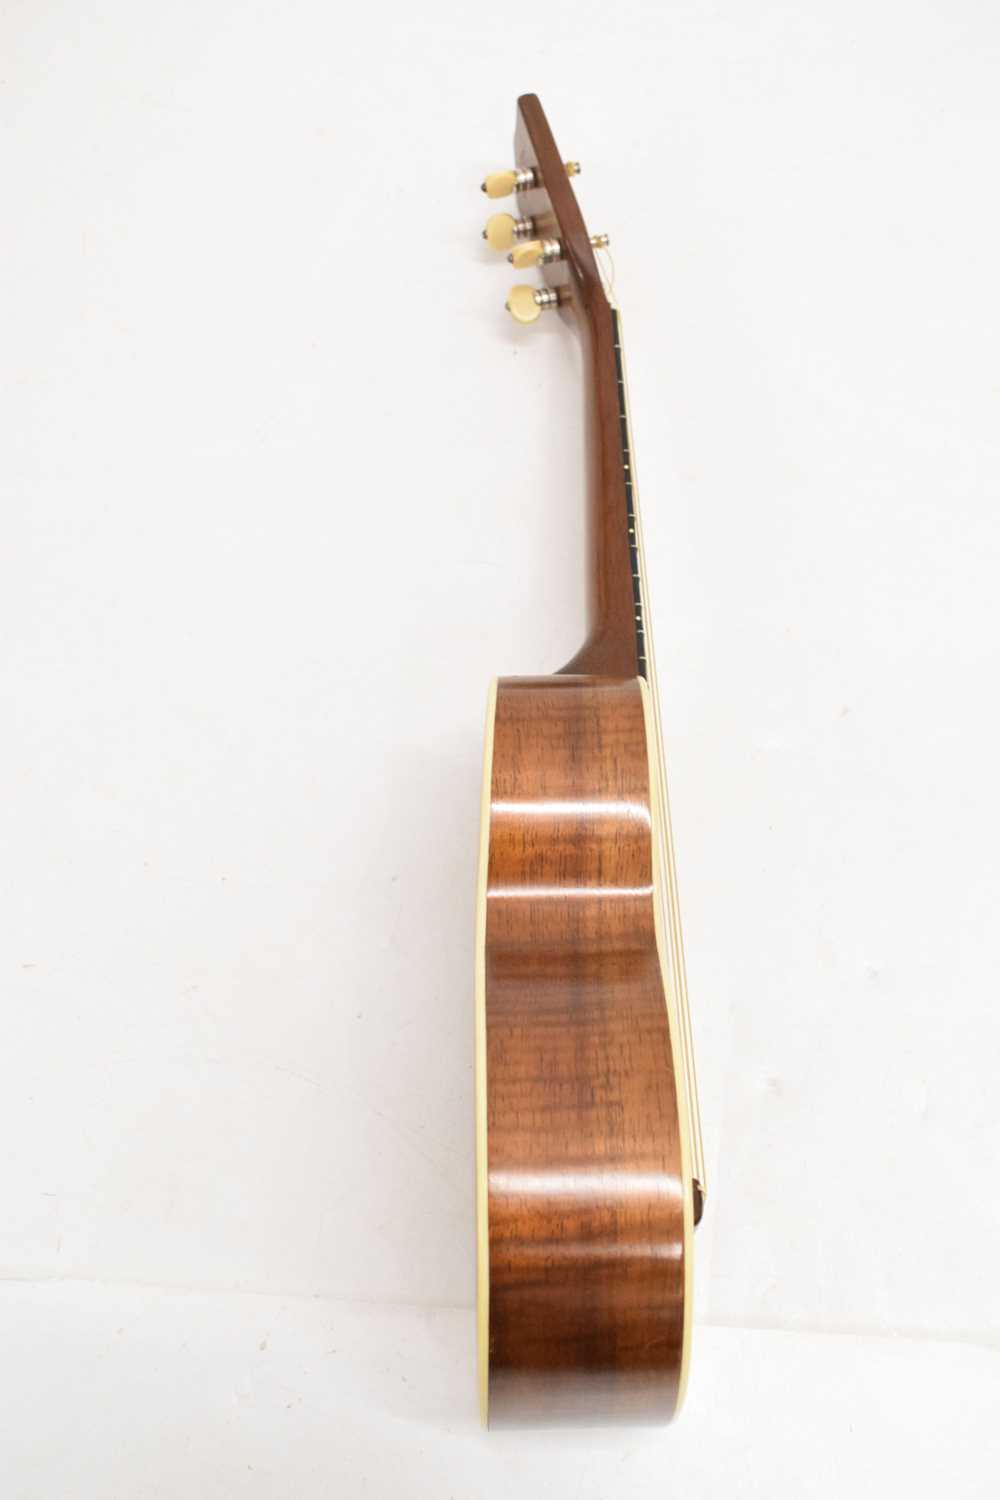 C.F. Martin & Co of Nazareth PA - 4 string Ivorine inlaid ukelele - Image 5 of 6